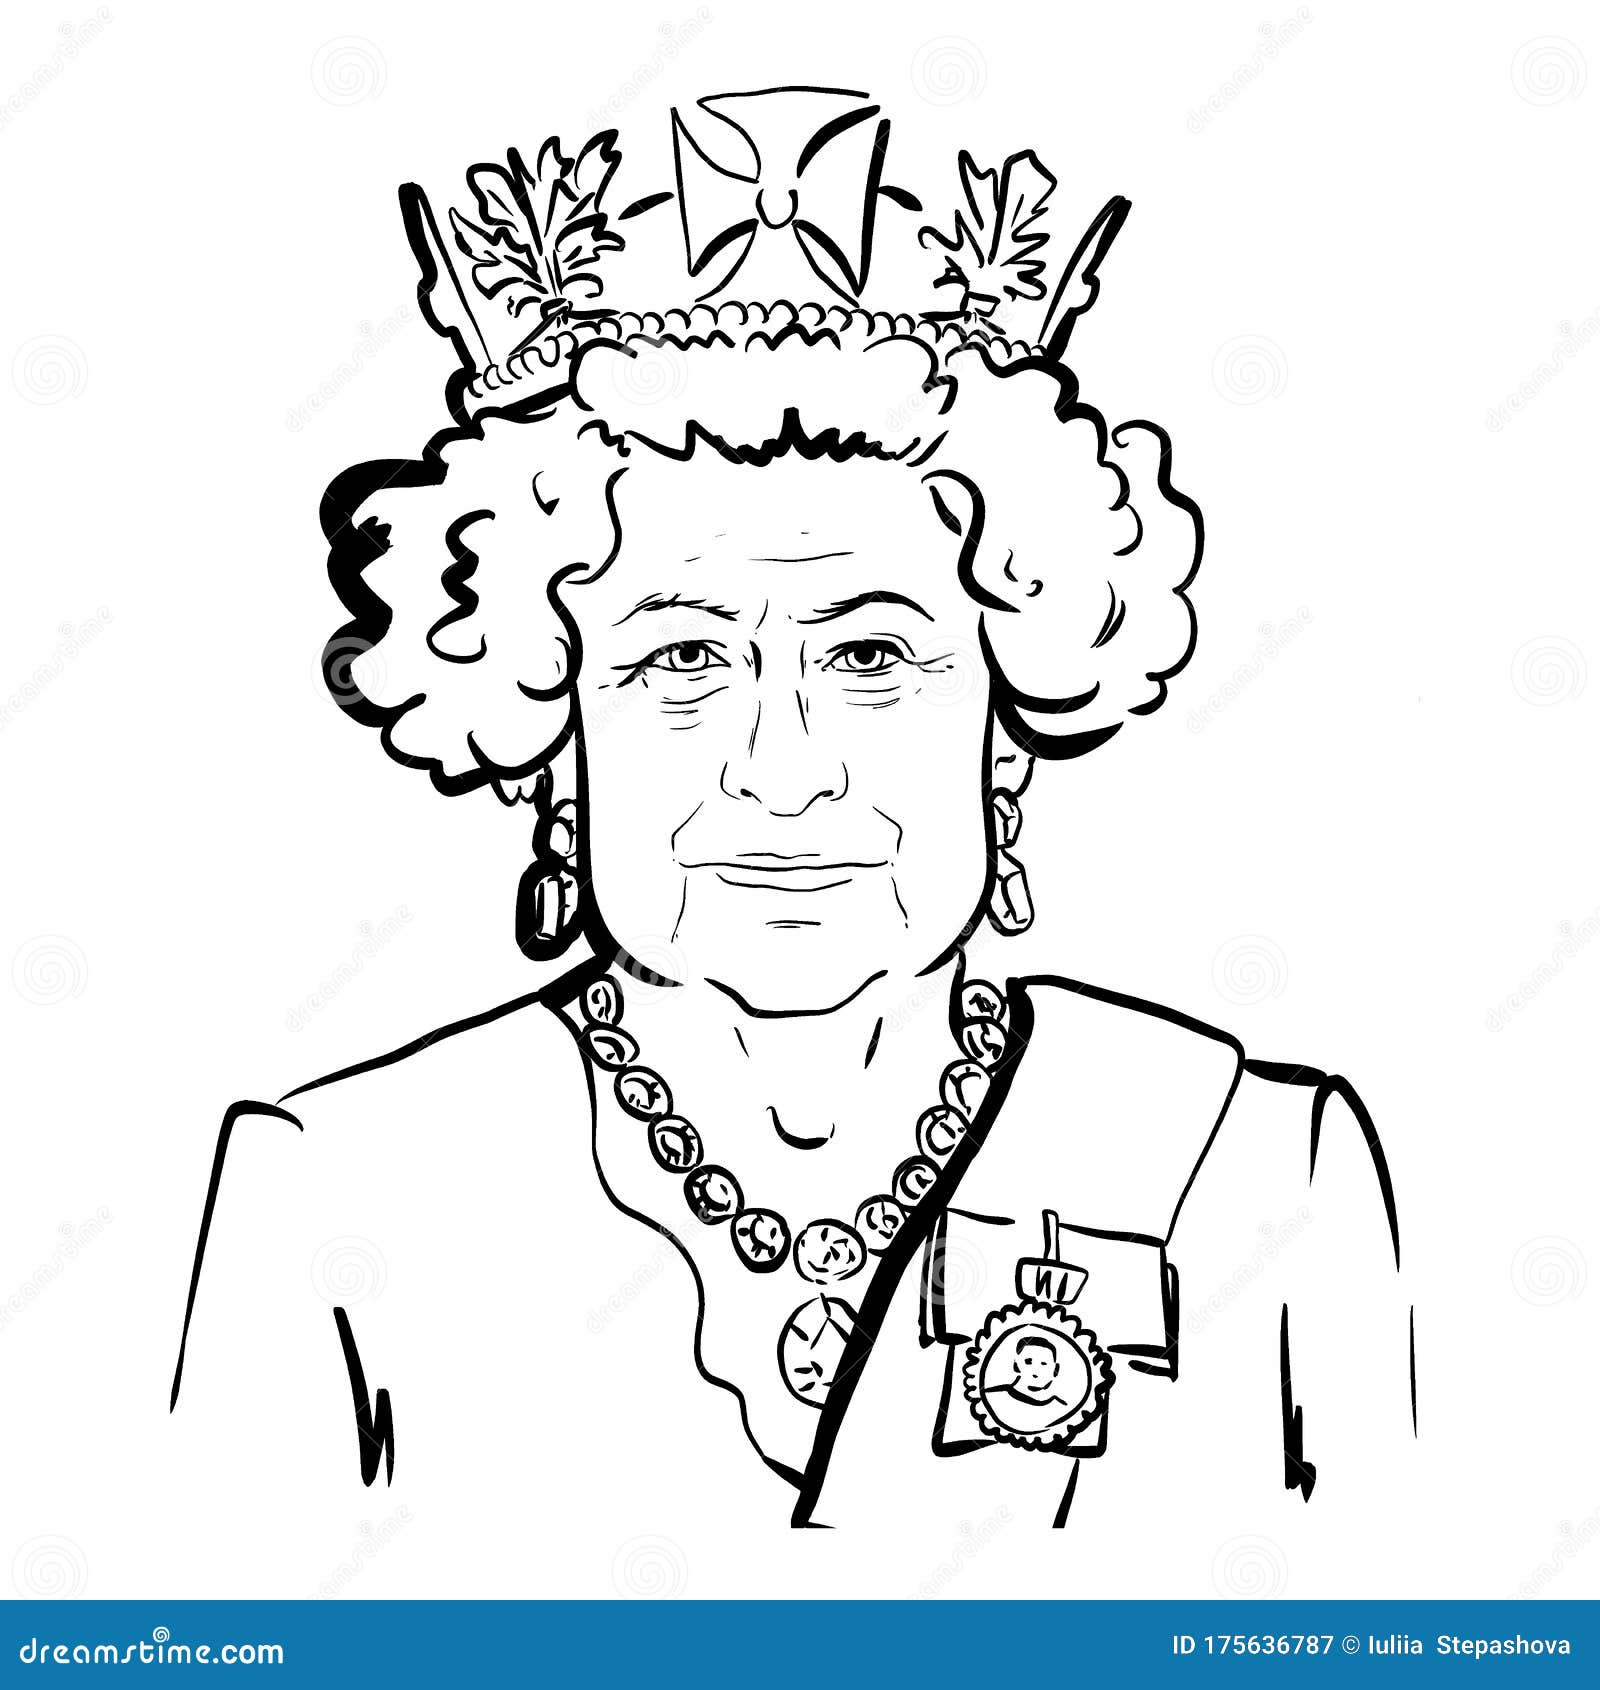 Queen Elizabeth II Hedcut Journal Headshot Illustration by Rahmad Kurniawan  on Dribbble